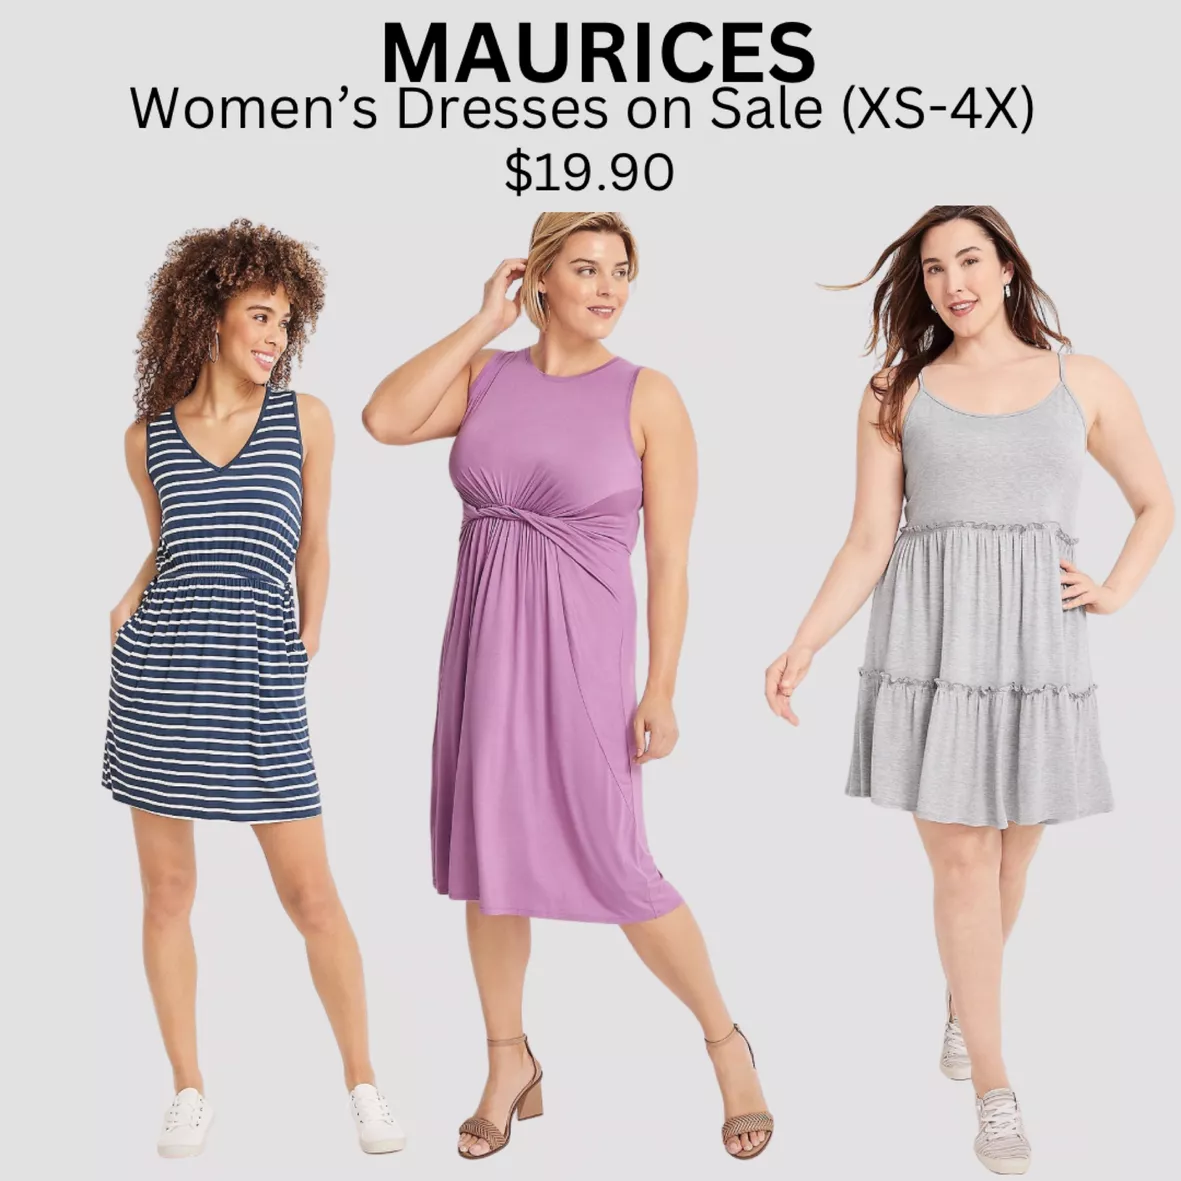 Women's Dresses On Sale